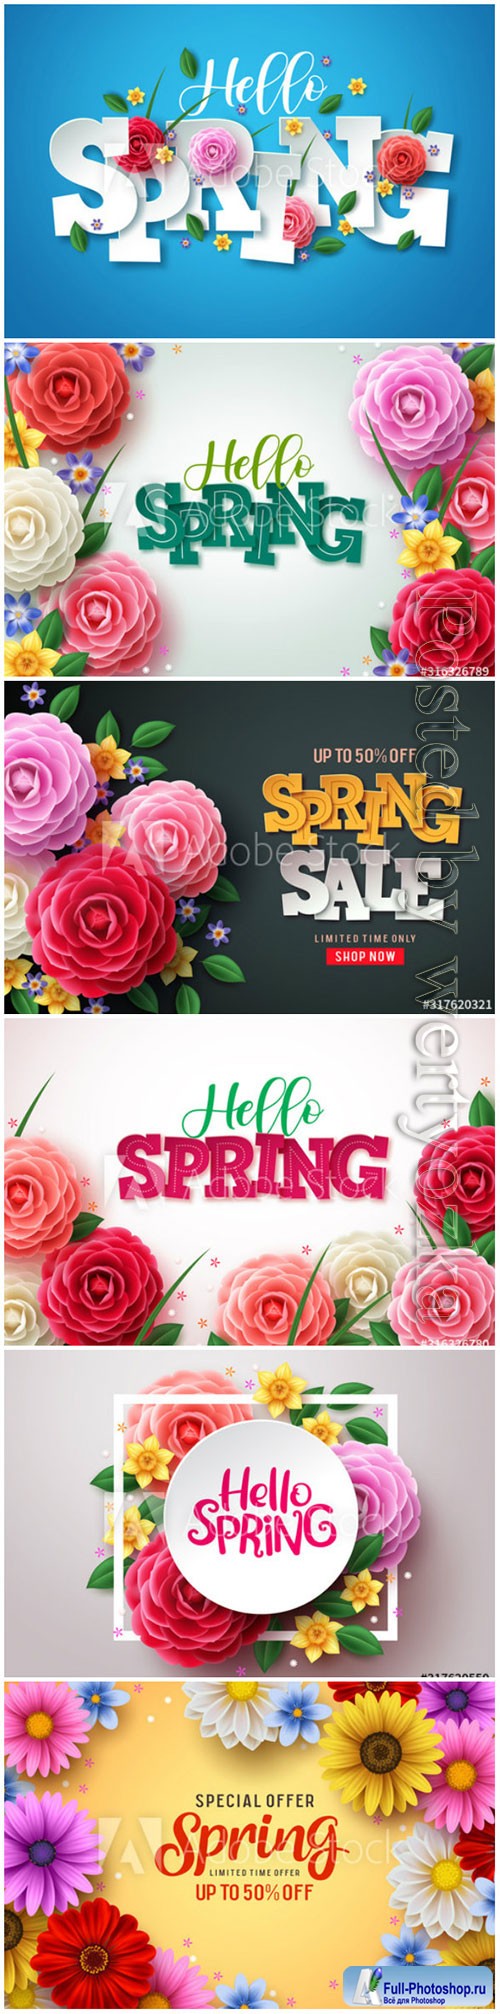 Spring special offer vector banner background